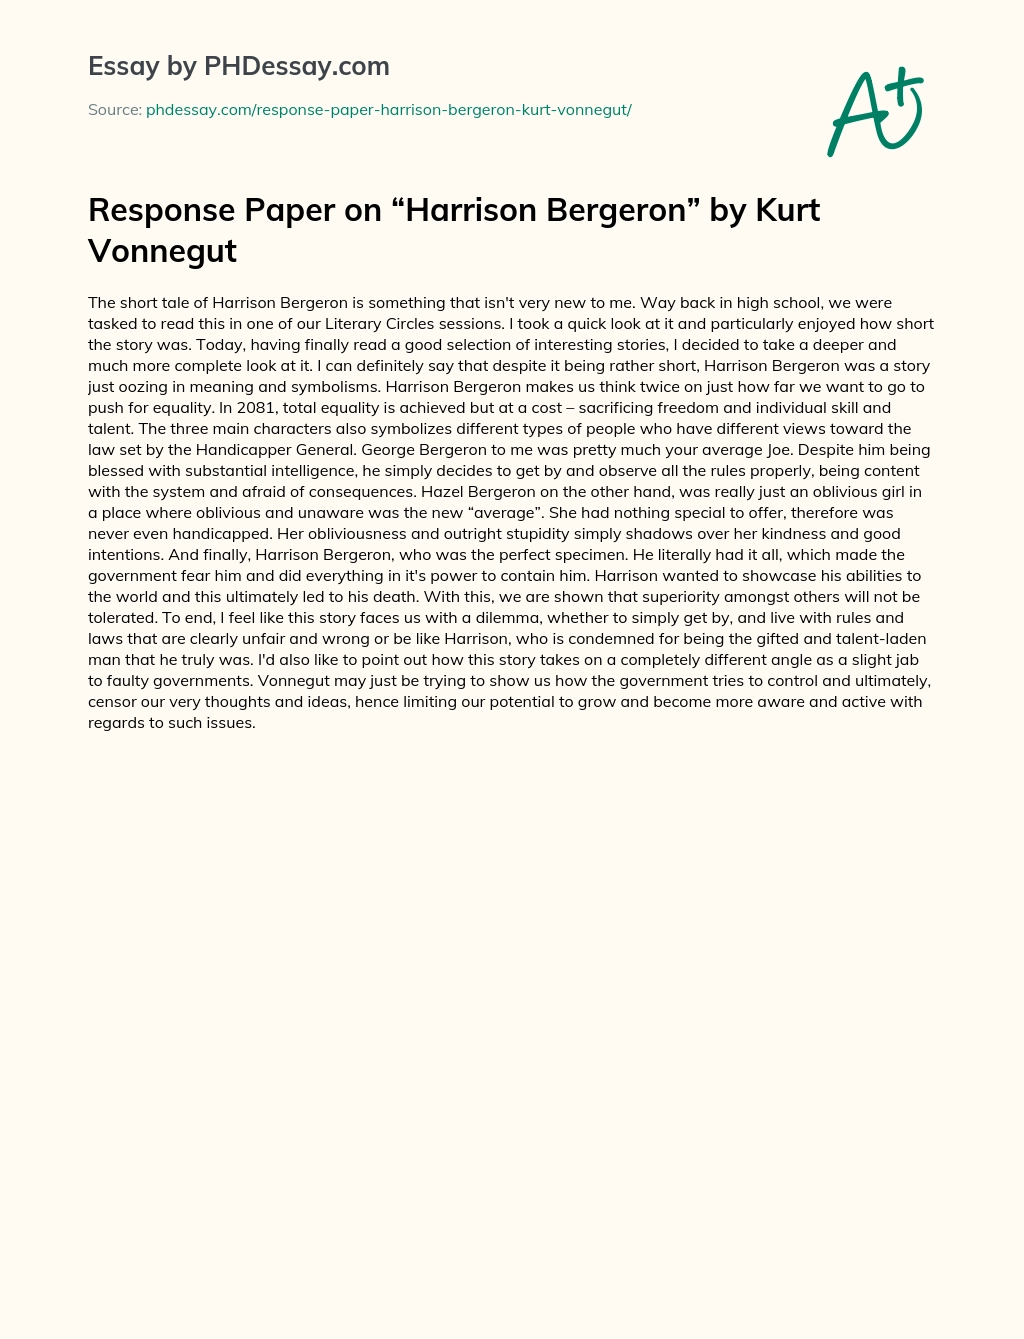 “Harrison Bergeron” by Kurt Vonnegut essay